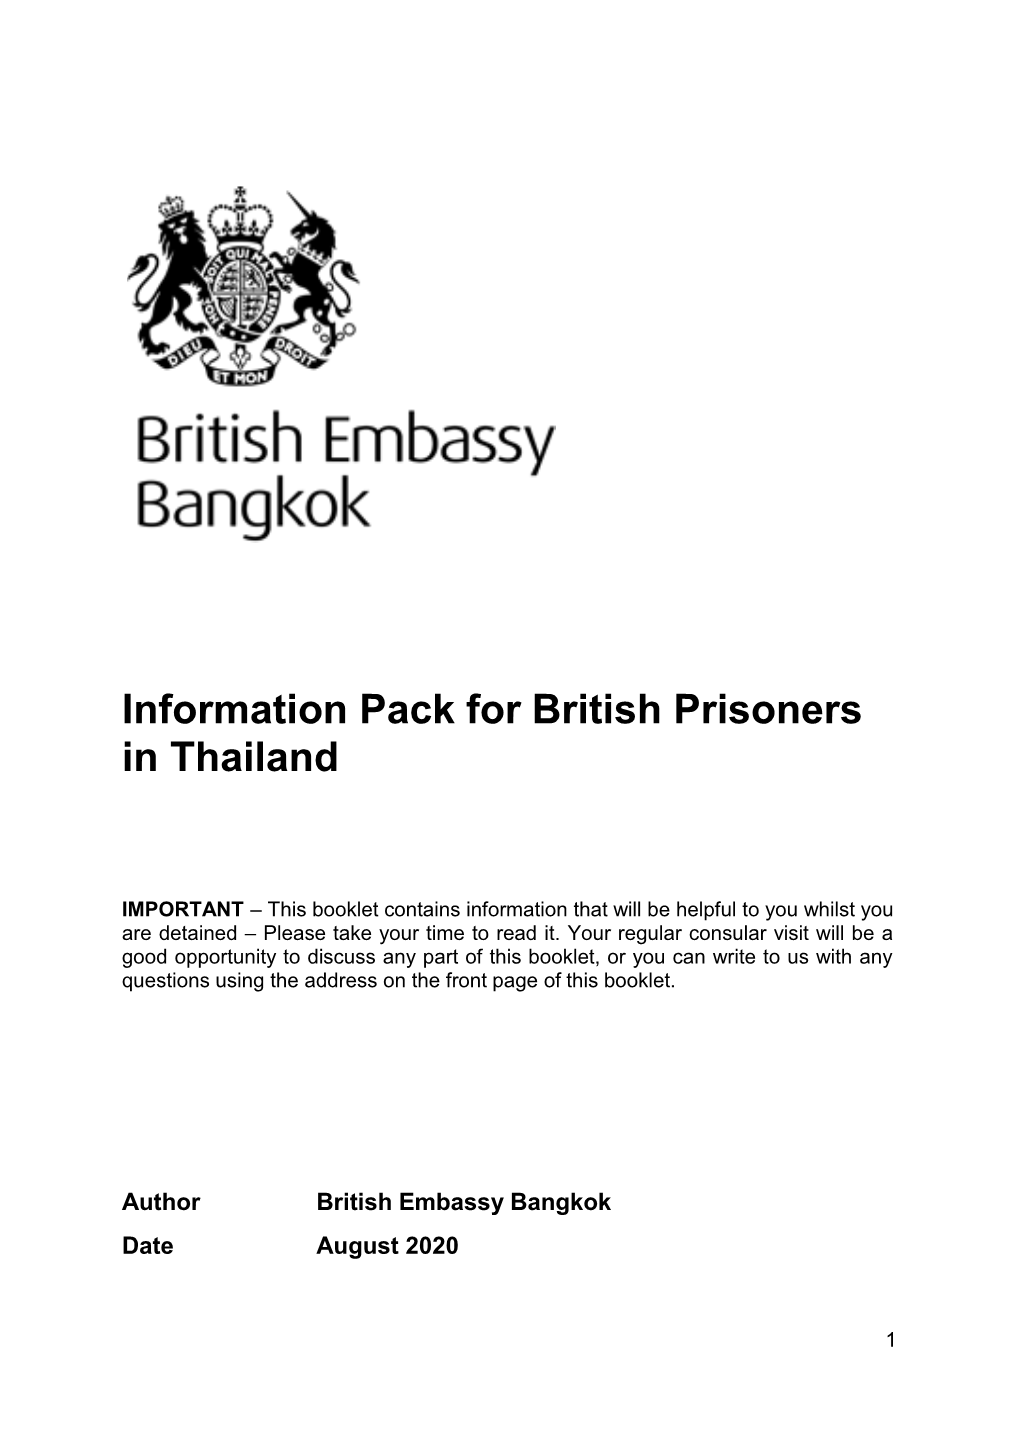 Information Pack for British Prisoners in Thailand